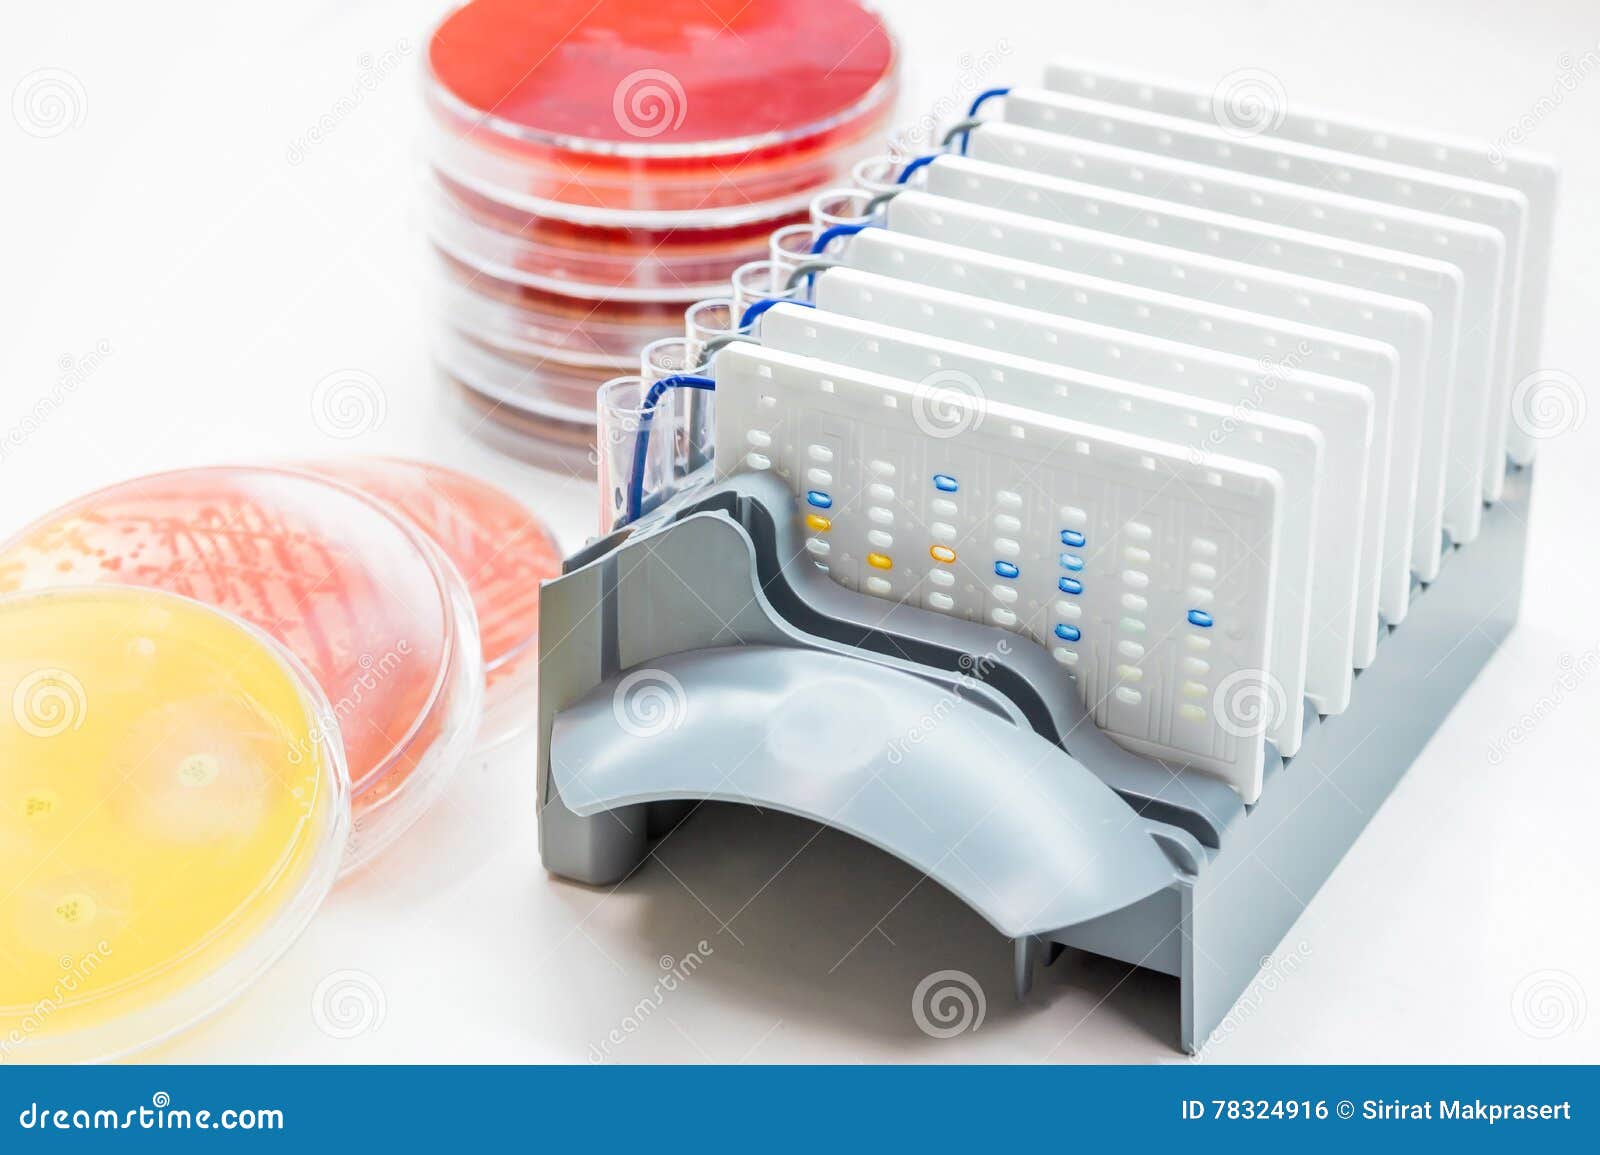 biochem test automate for identified pathogen in microbiology r